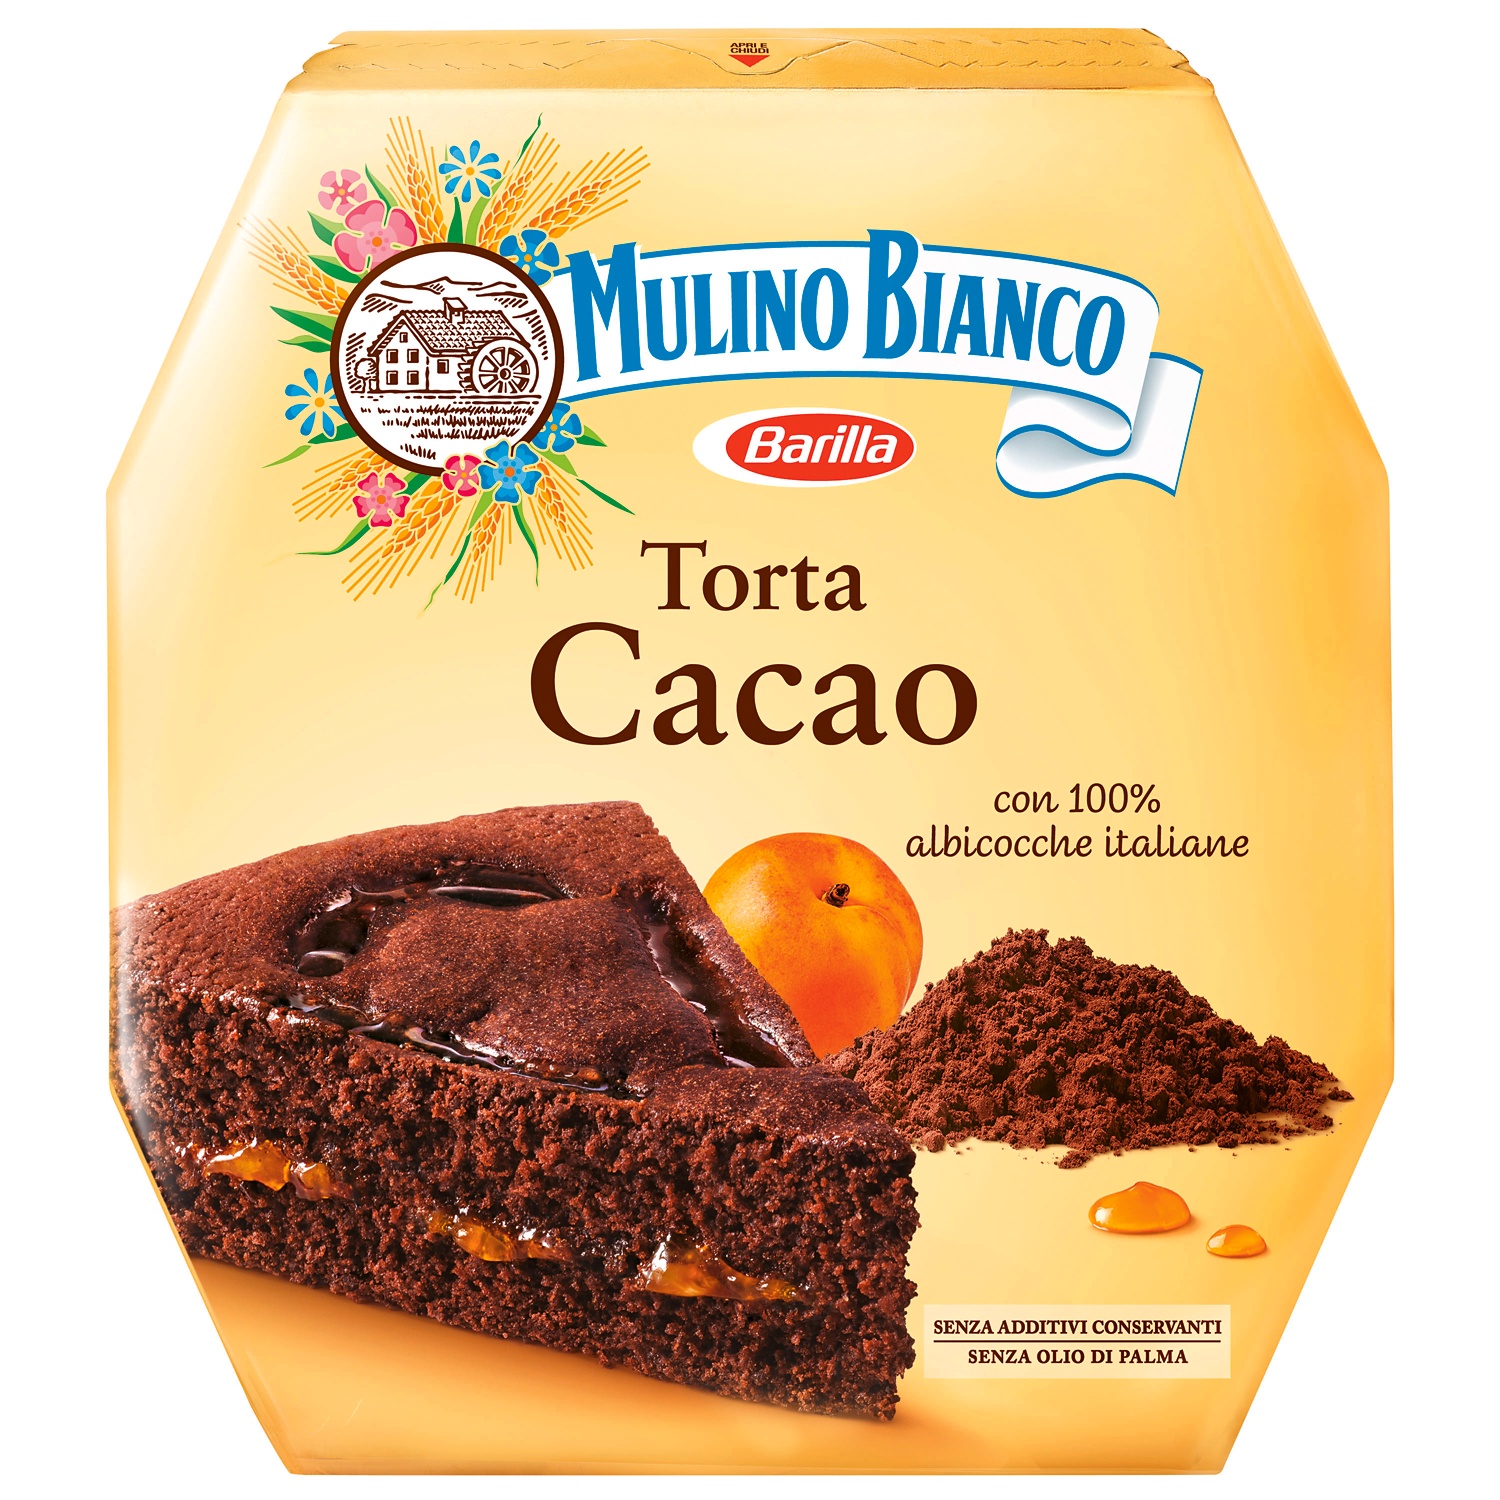 MULINO BIANCO Torta Cacao